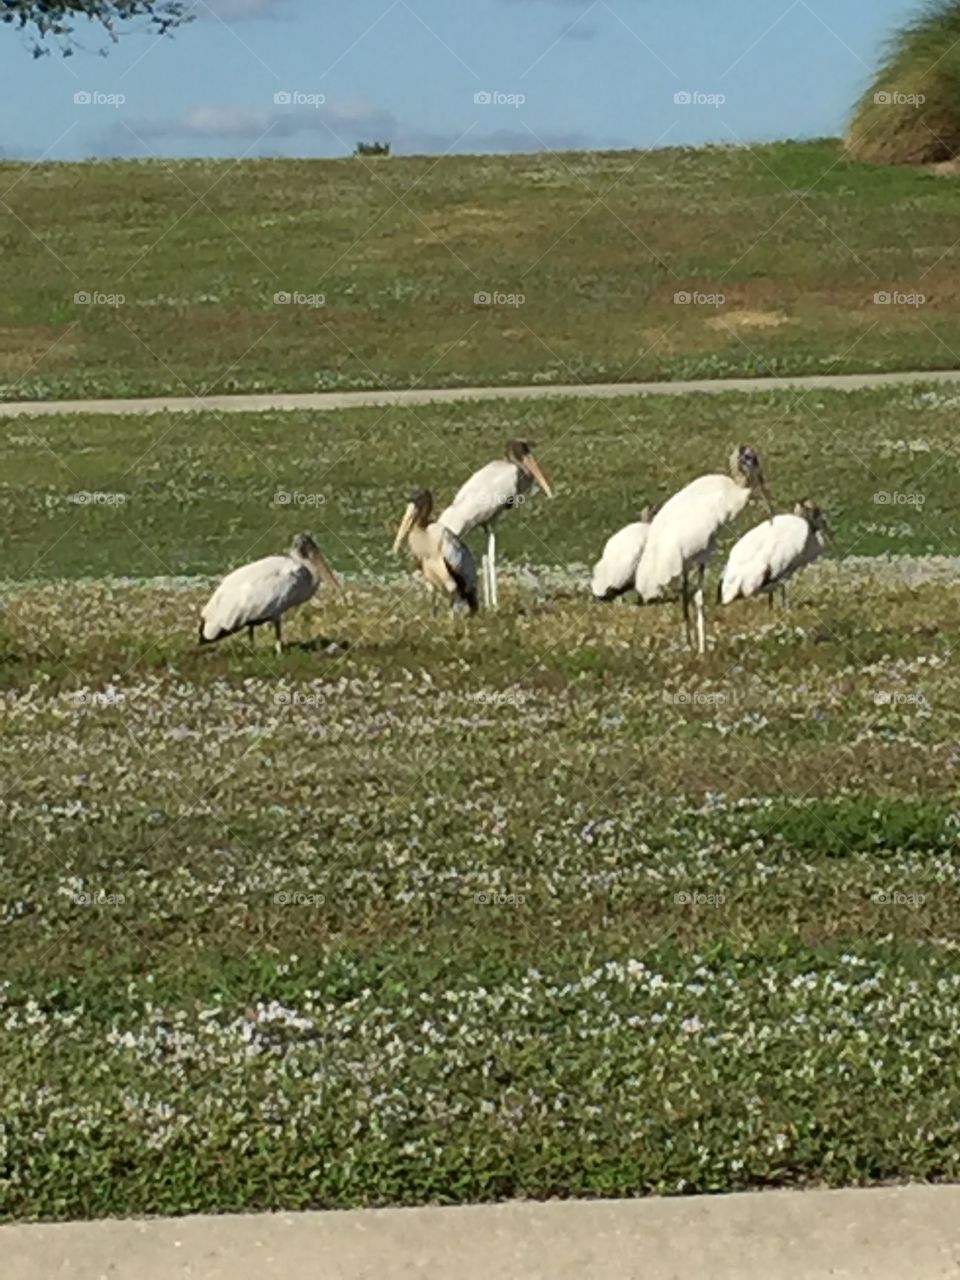 Storks gathering